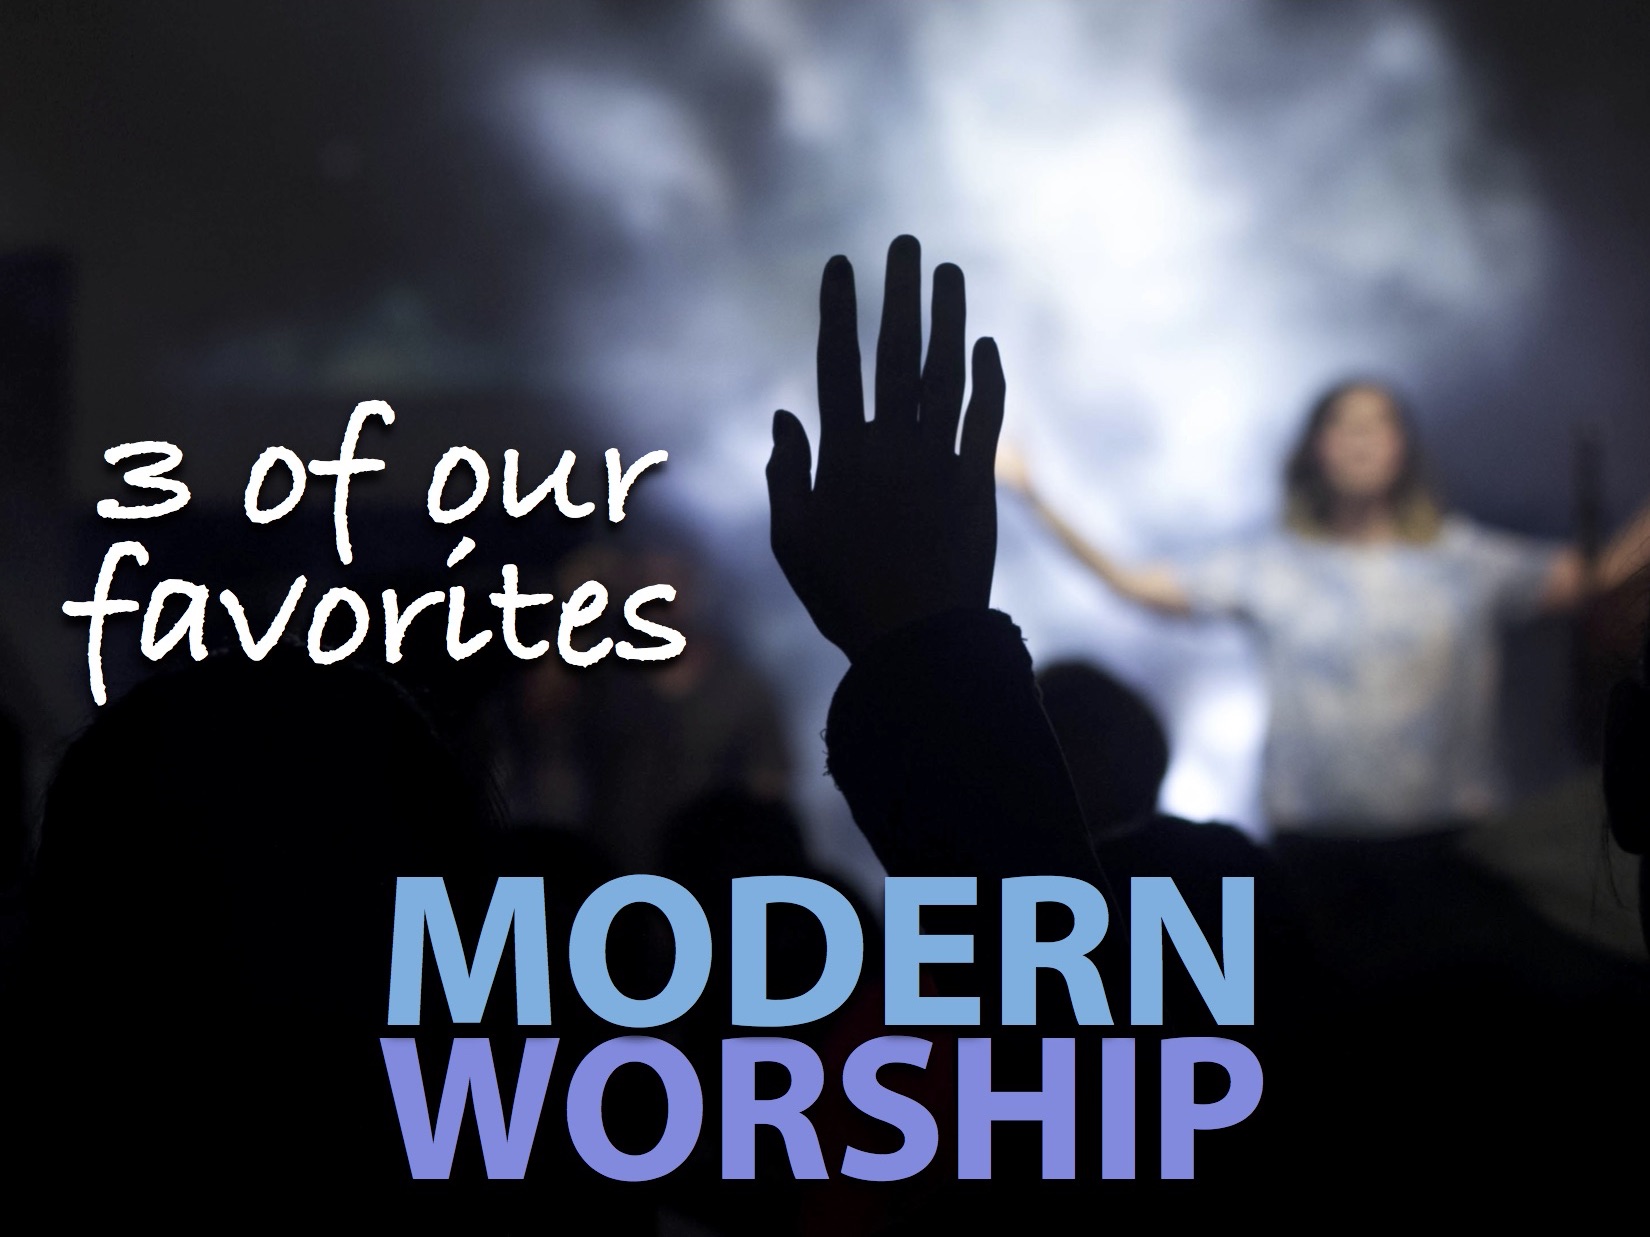 Modern Worship 3 of Our Favorites Banner.jpg